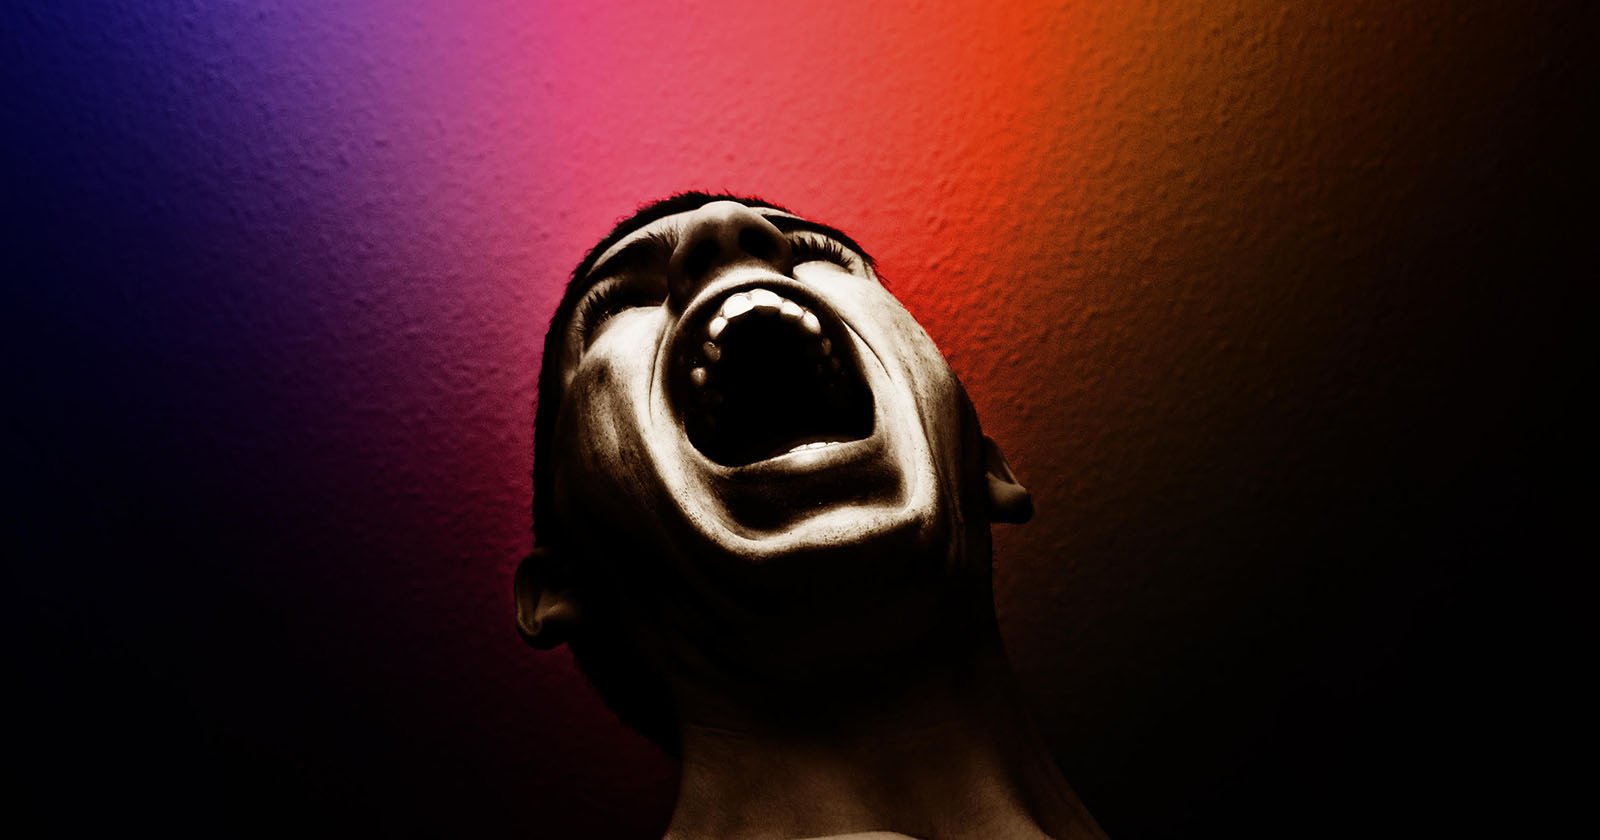  stolen scream photographer creates internet copies nft 